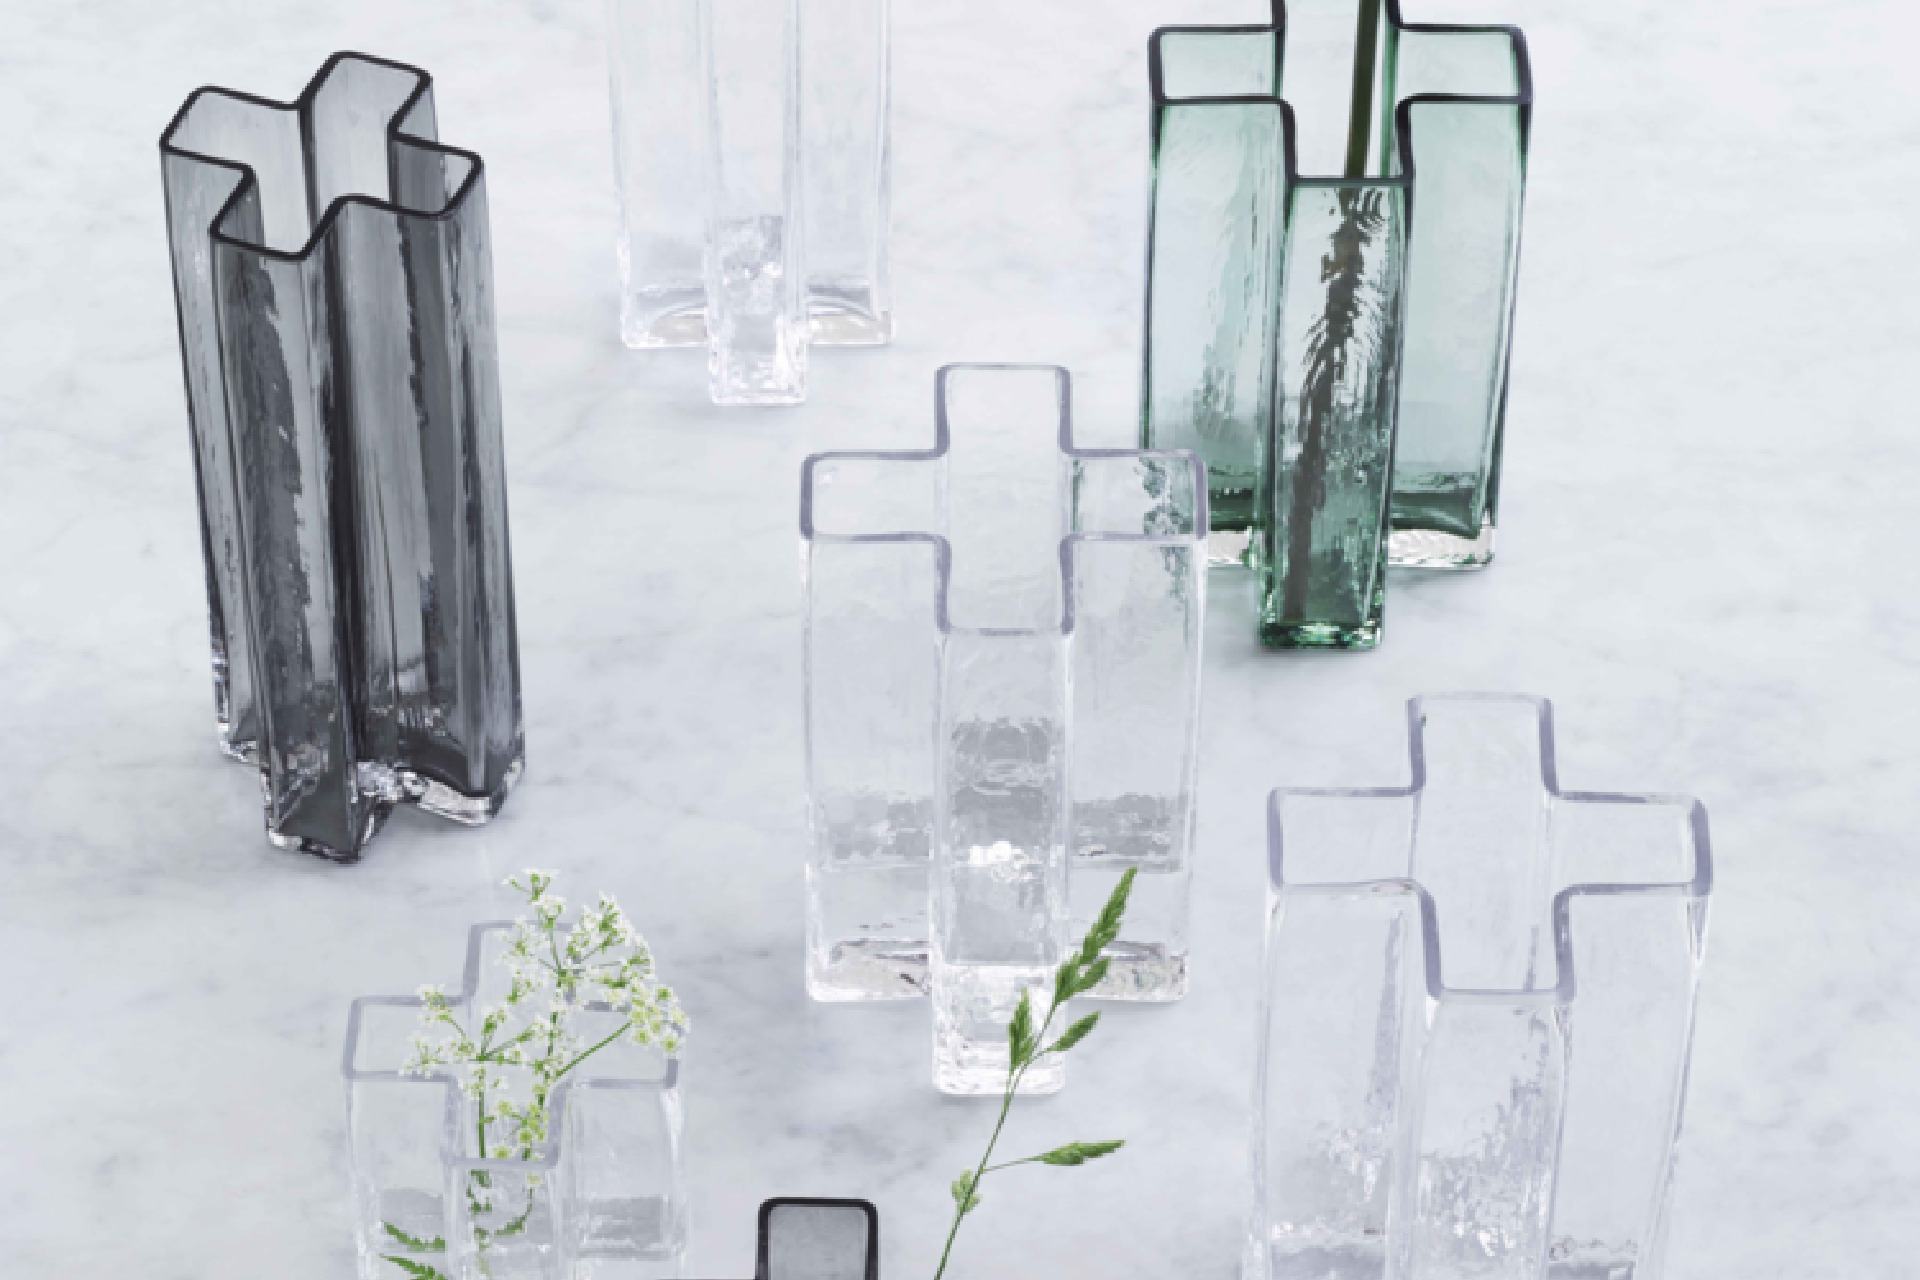 Relaunched Crosses vases, designed by Bodil Kjær